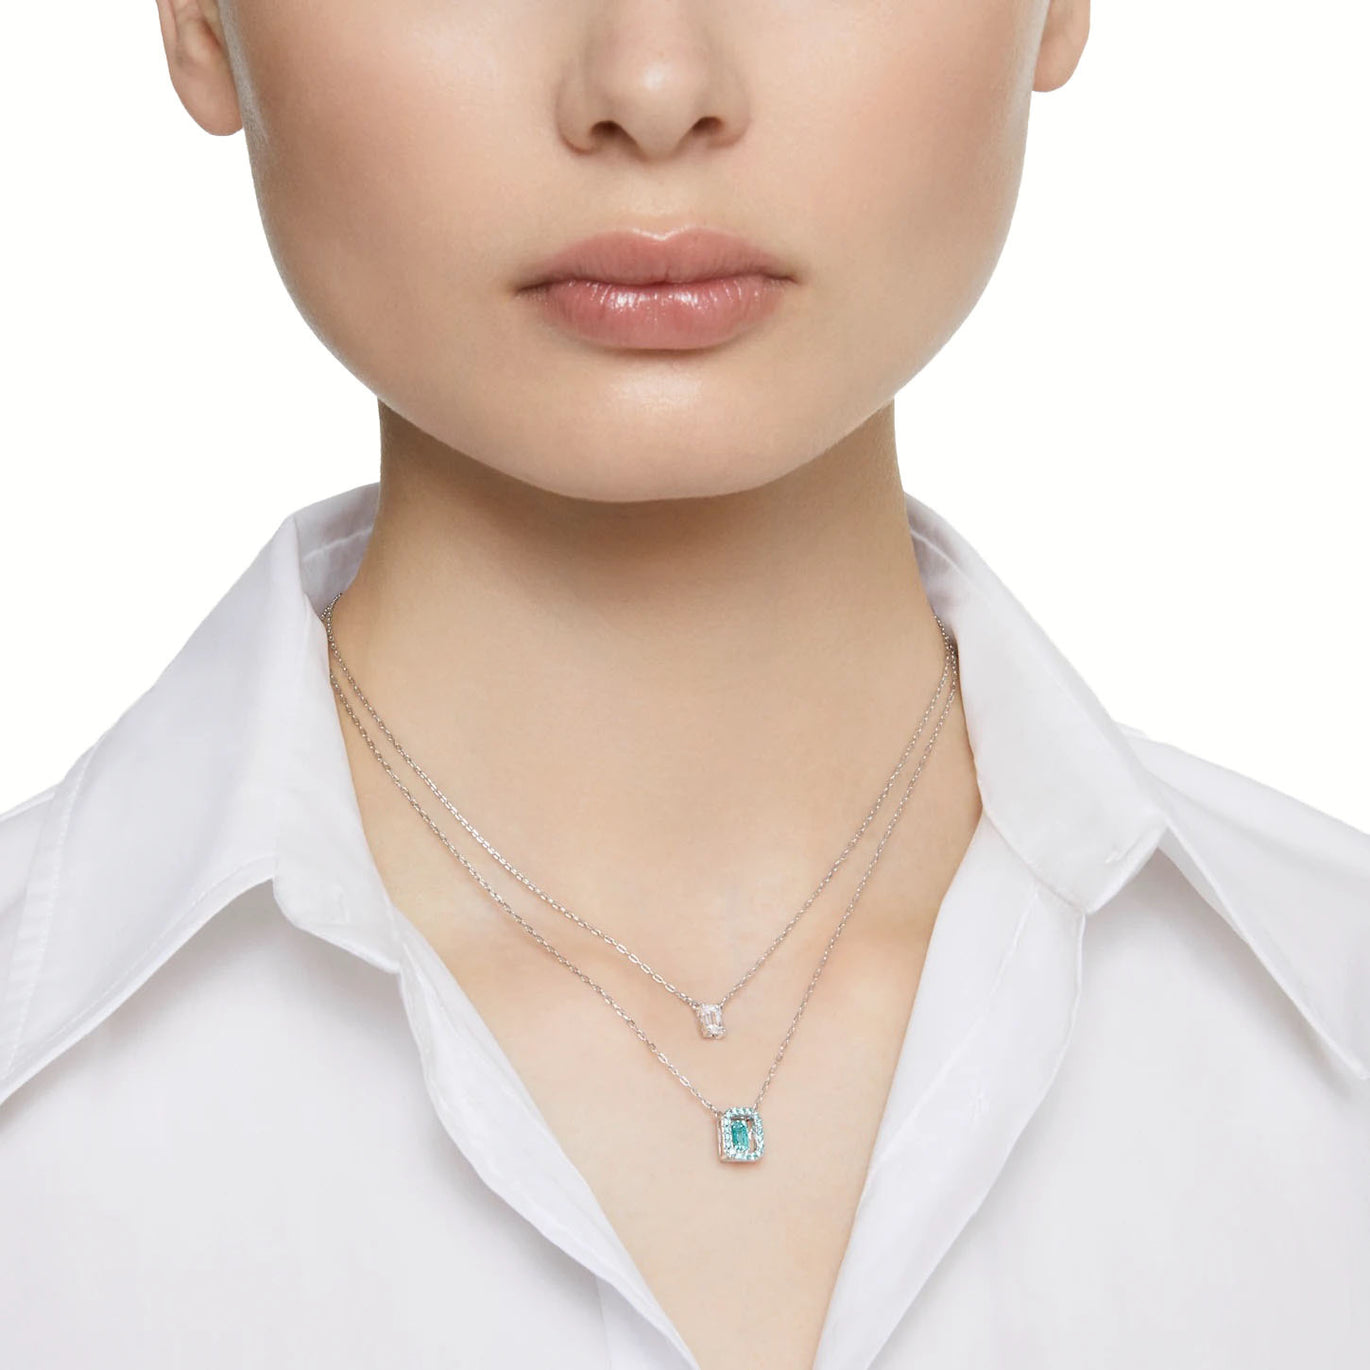 Swarovski Millenia Layered Octagon cut necklace, Rhodium plated